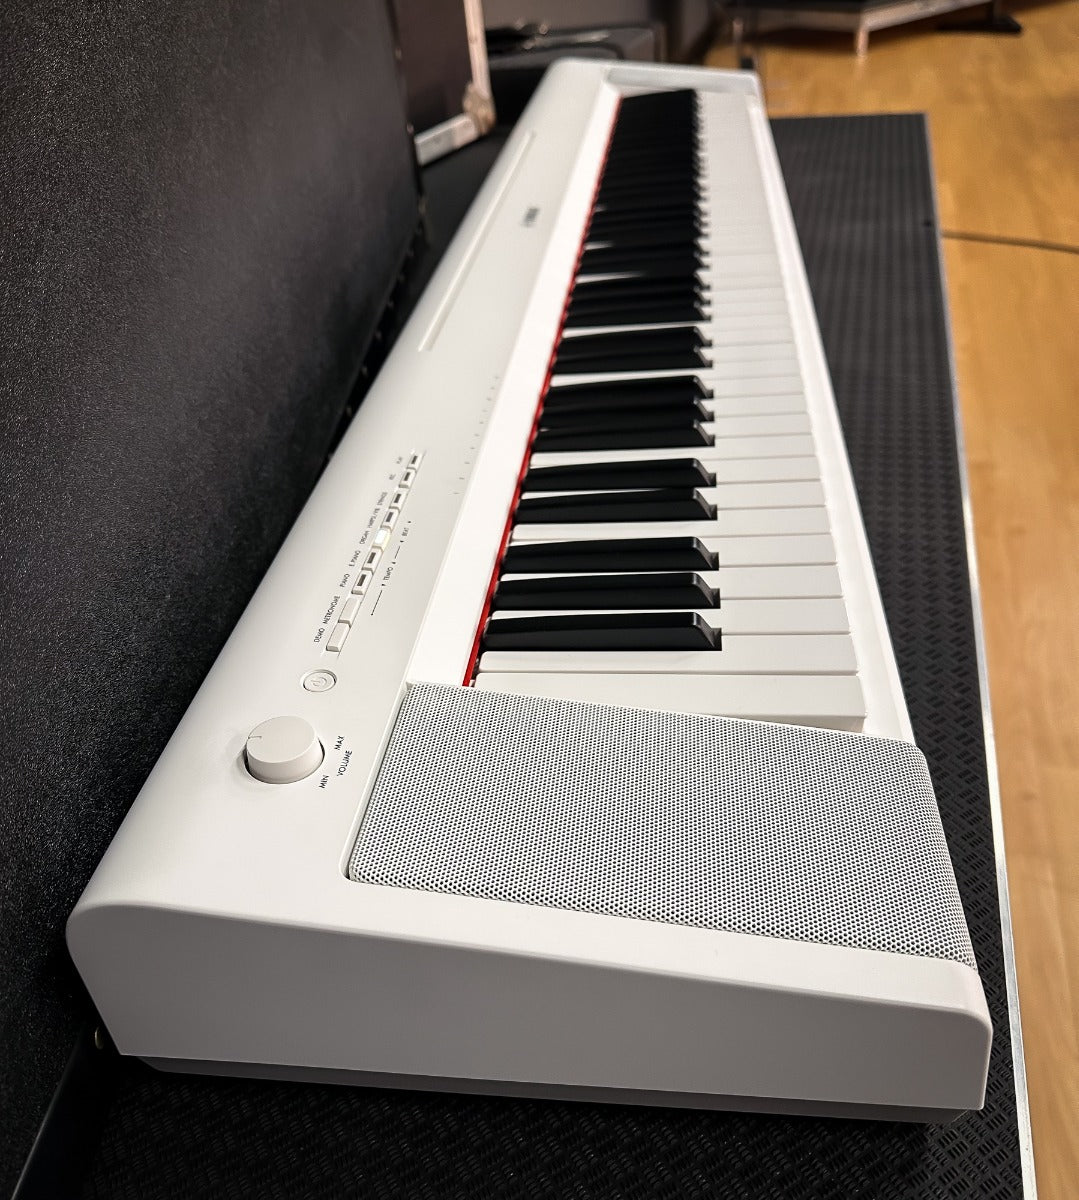 Yamaha Piaggero NP35 76-Key Portable Keyboard with Power Adapter - White, View 4